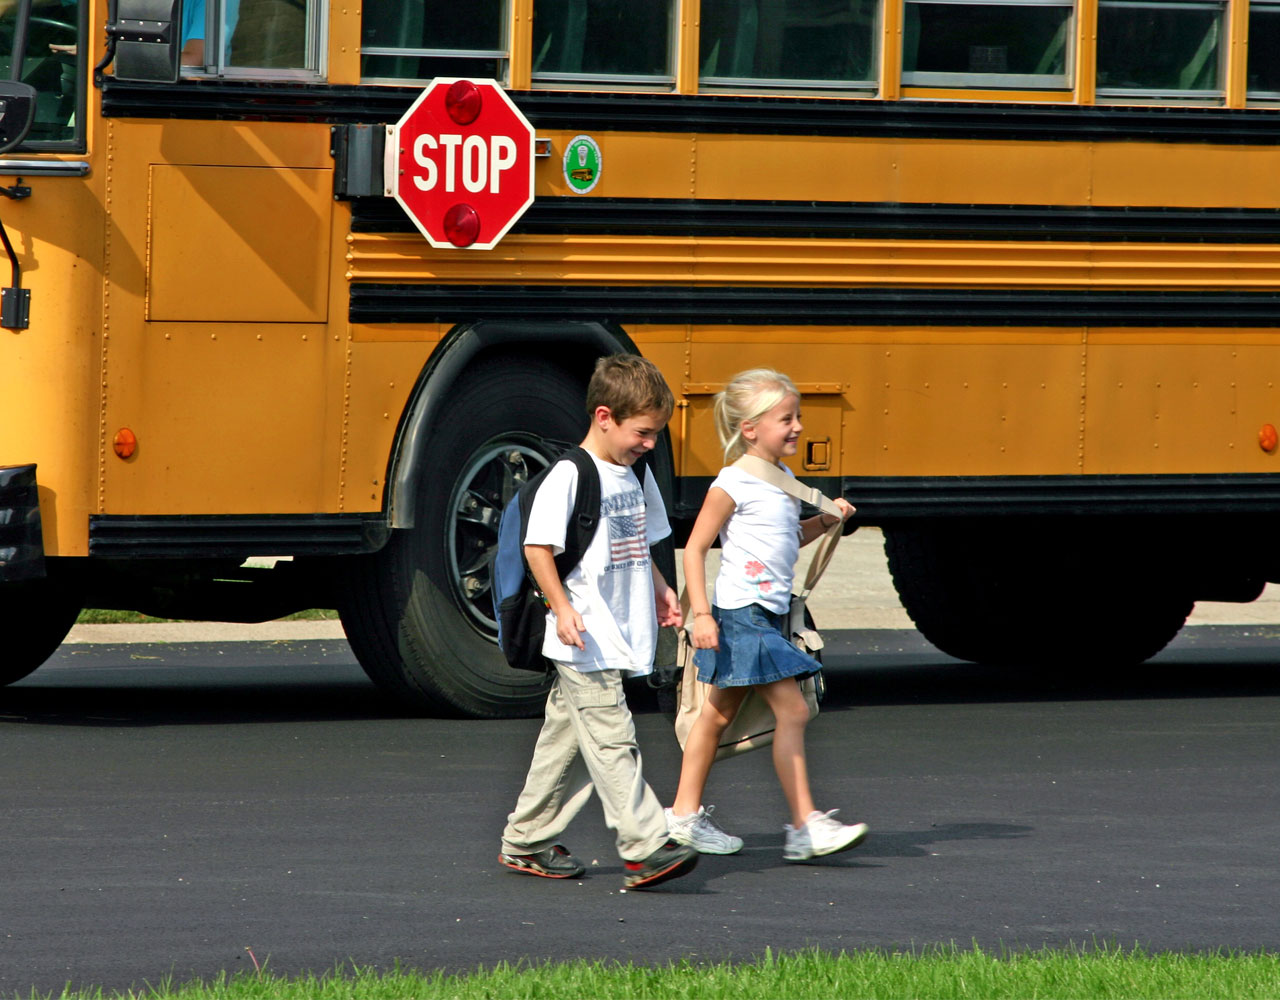 School kids walking safely next to school bus